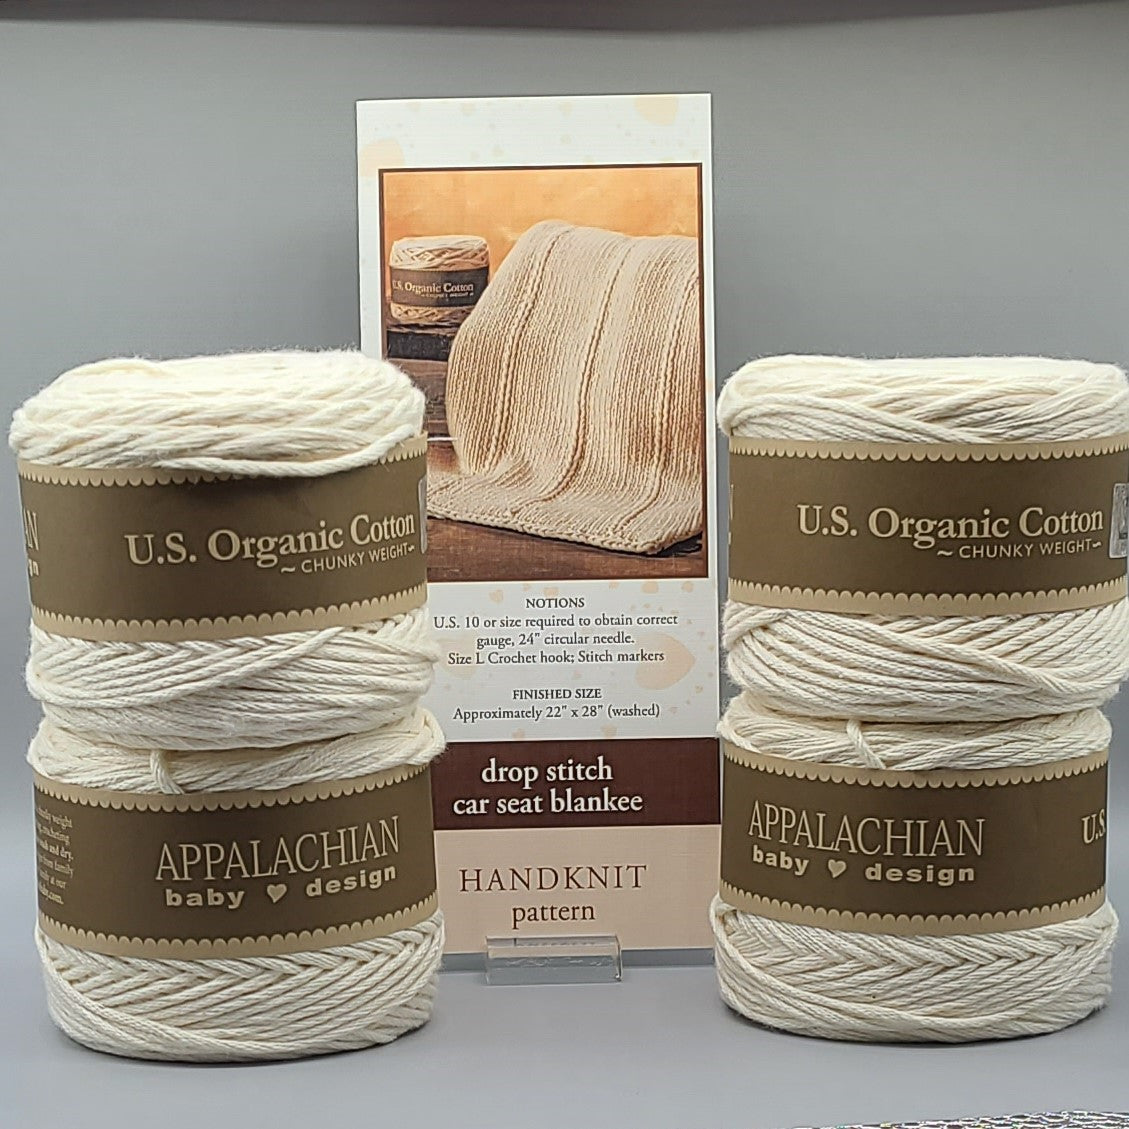 Baby Soft U.S. Organic Cotton Blanket Kit